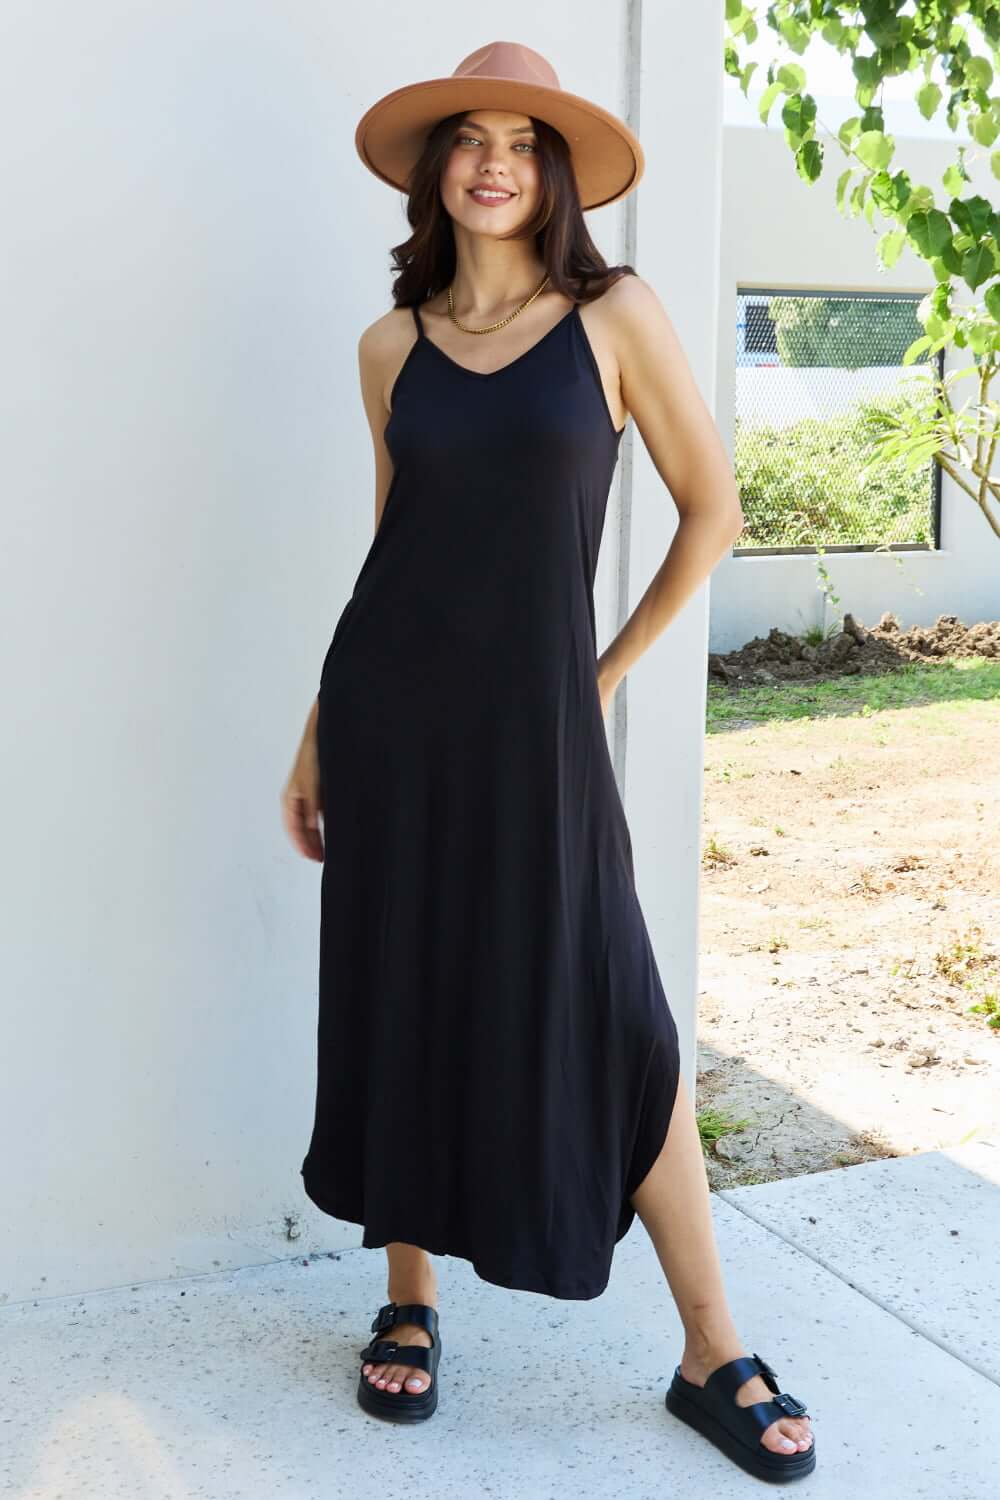 NINEXIS Good Energy Full Size Cami Side Slit Maxi Dress in Black at Bella Road